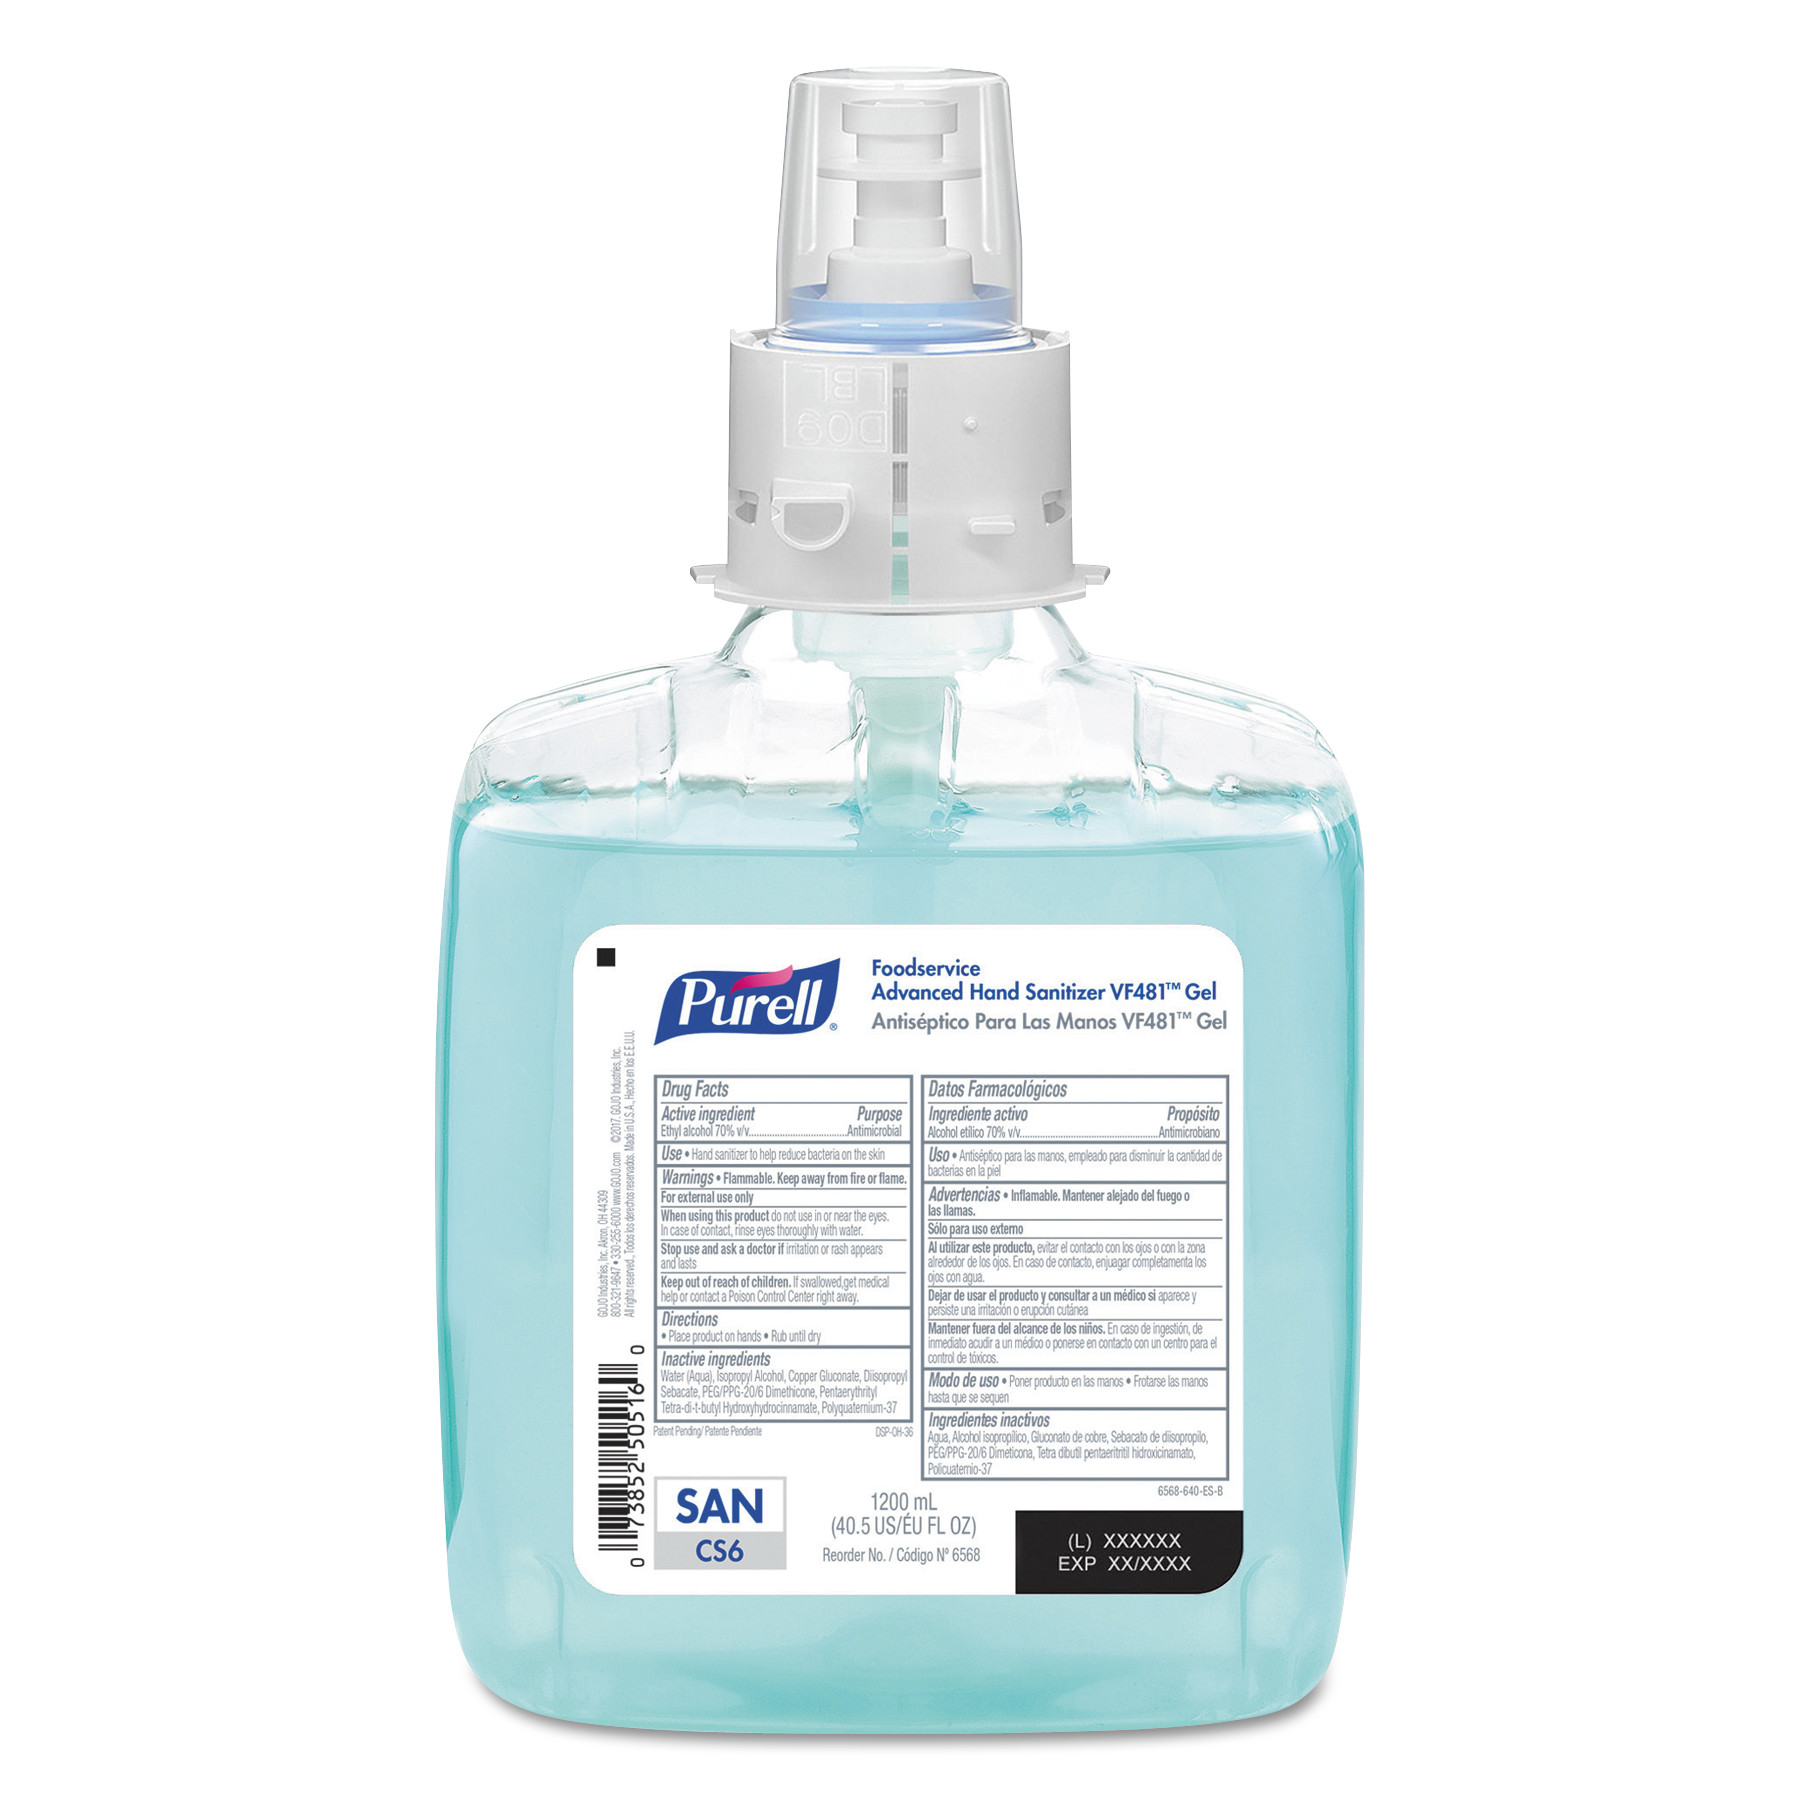  PURELL 6568-02 Foodservice Advanced Hand Sanitizer VF481 Gel, 1200 mL, For CS6 Dispensers, 2/Carton (GOJ656802) 